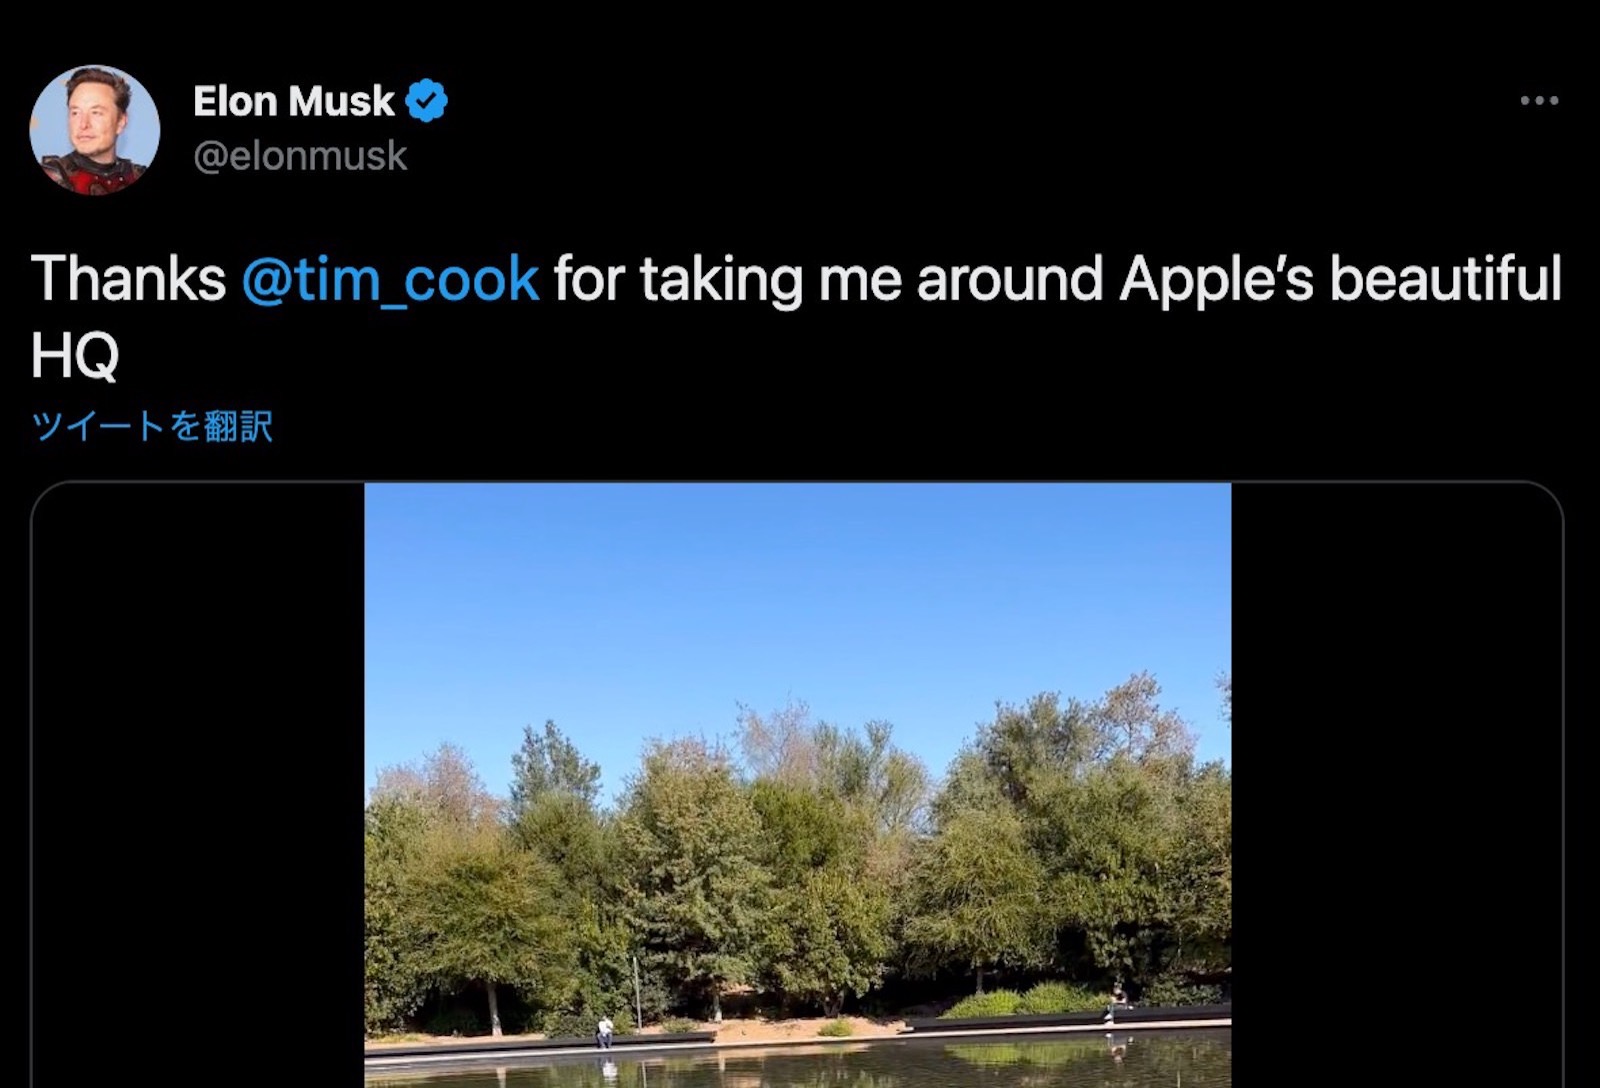 Elon visits apple park